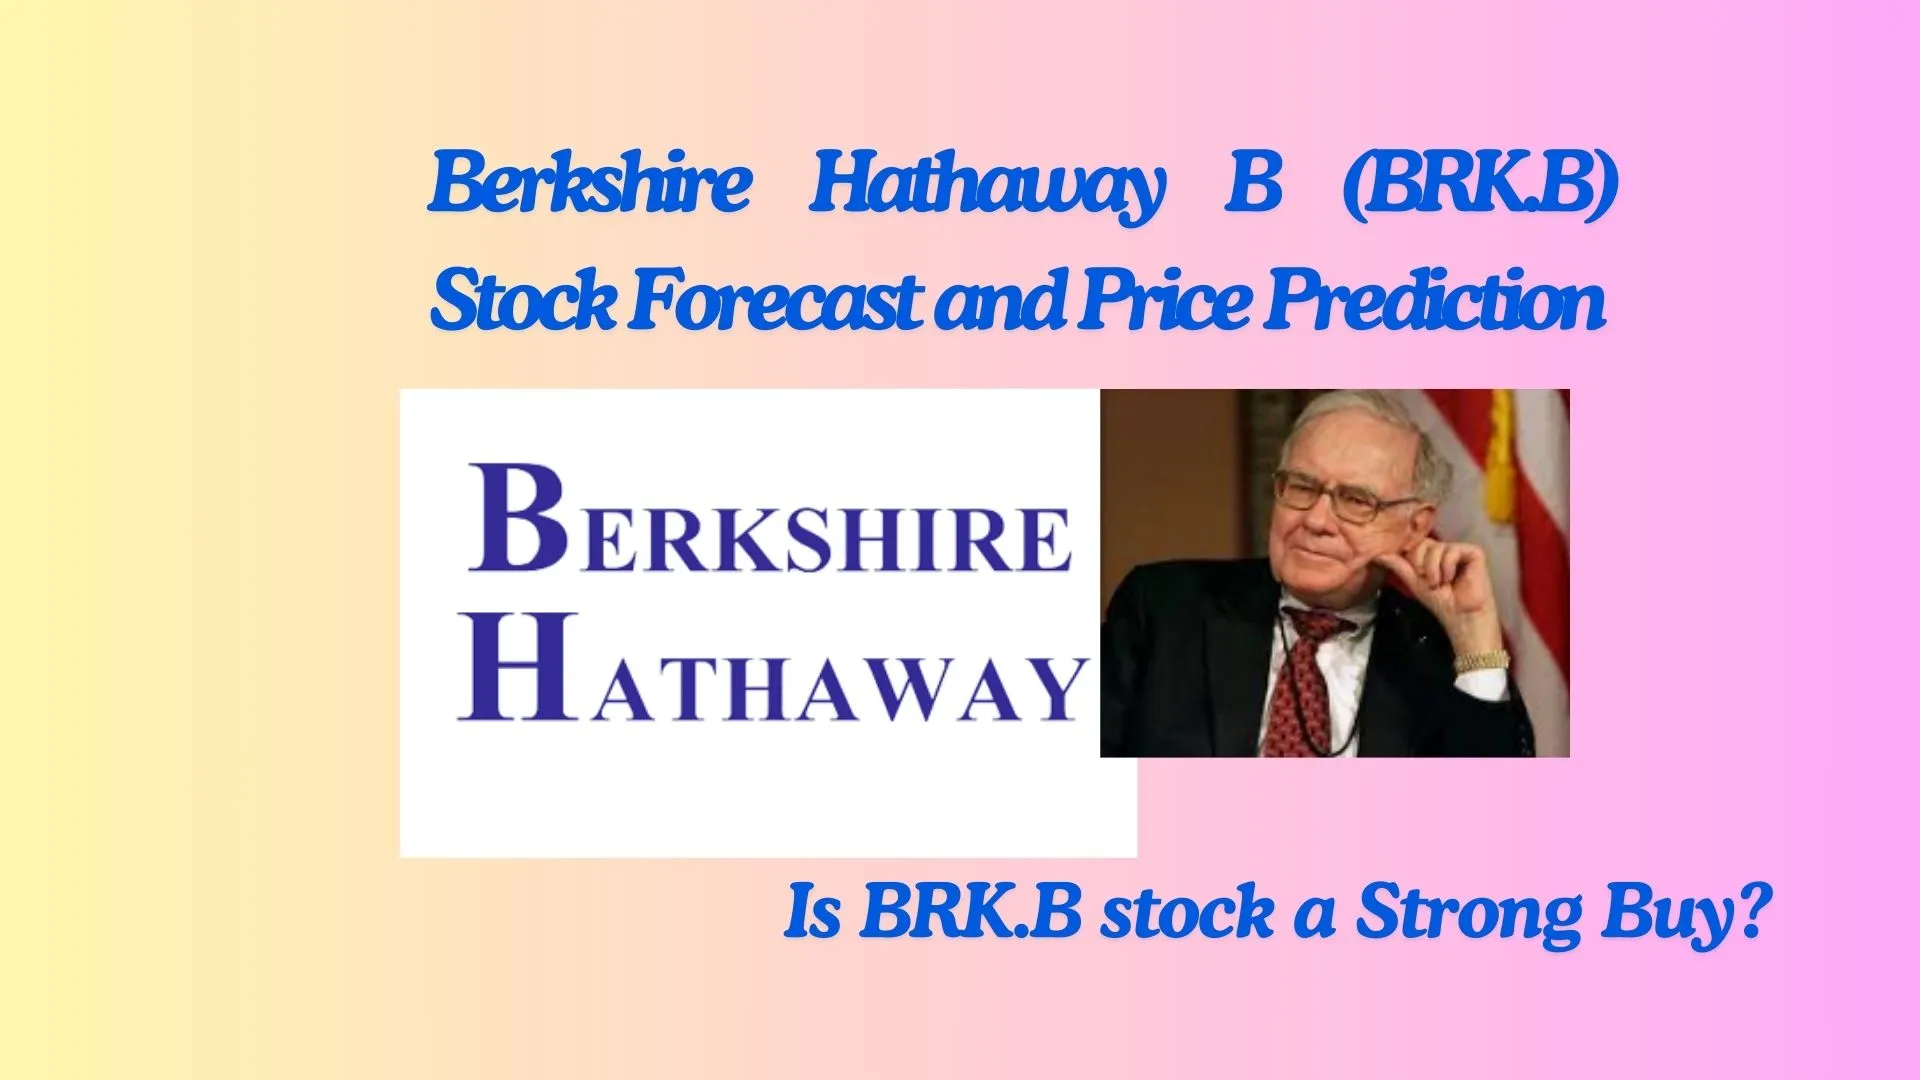 Berkshire Hathaway B (BRK.B)